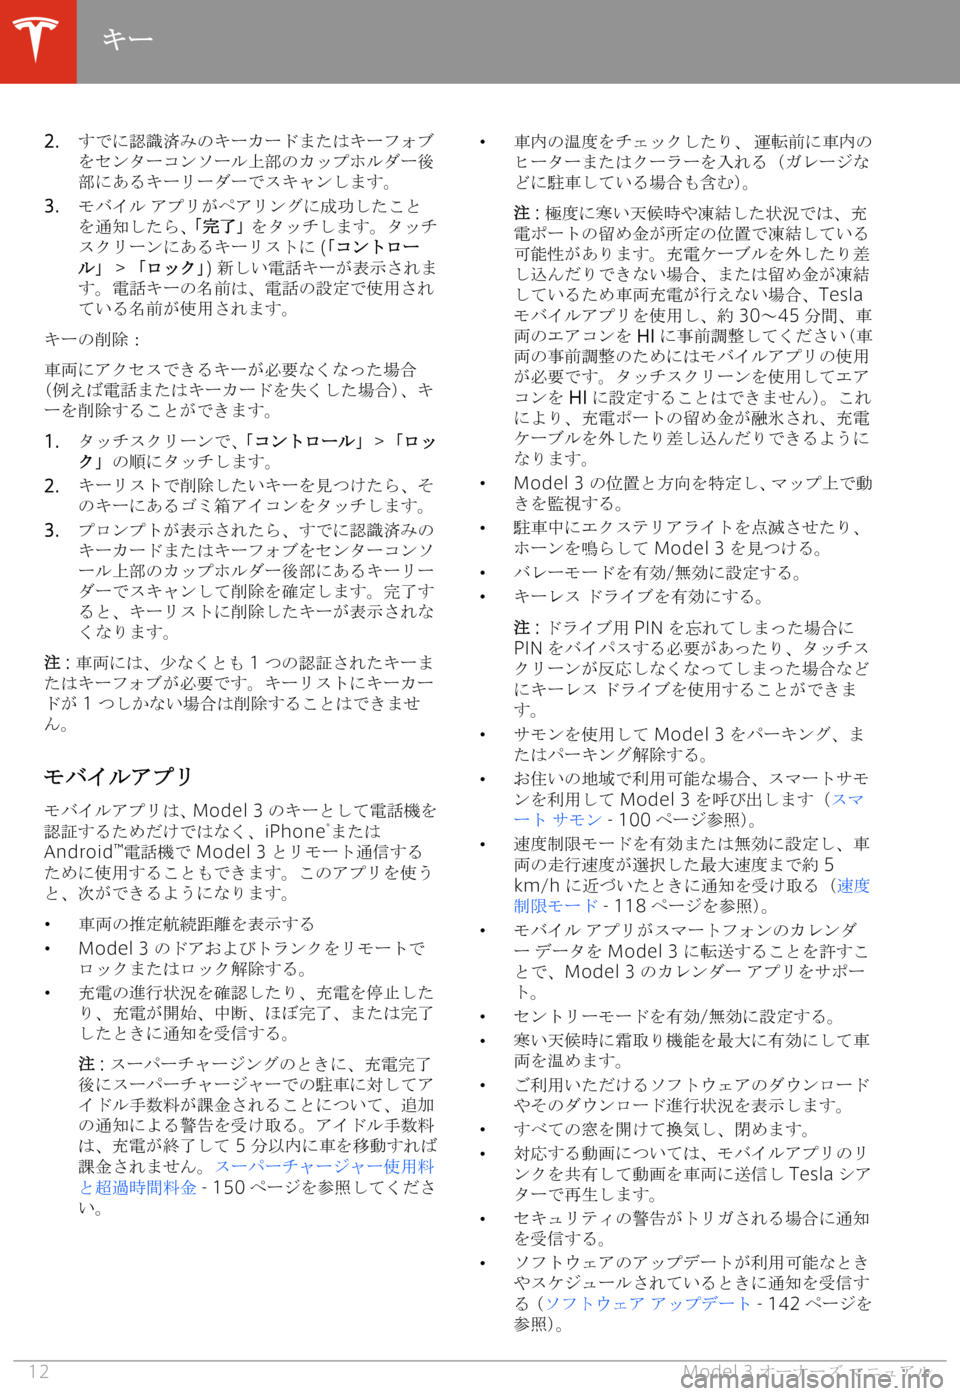 TESLA MODEL 3 2019  取扱説明書 (in Japanese)  �2�.M[_11